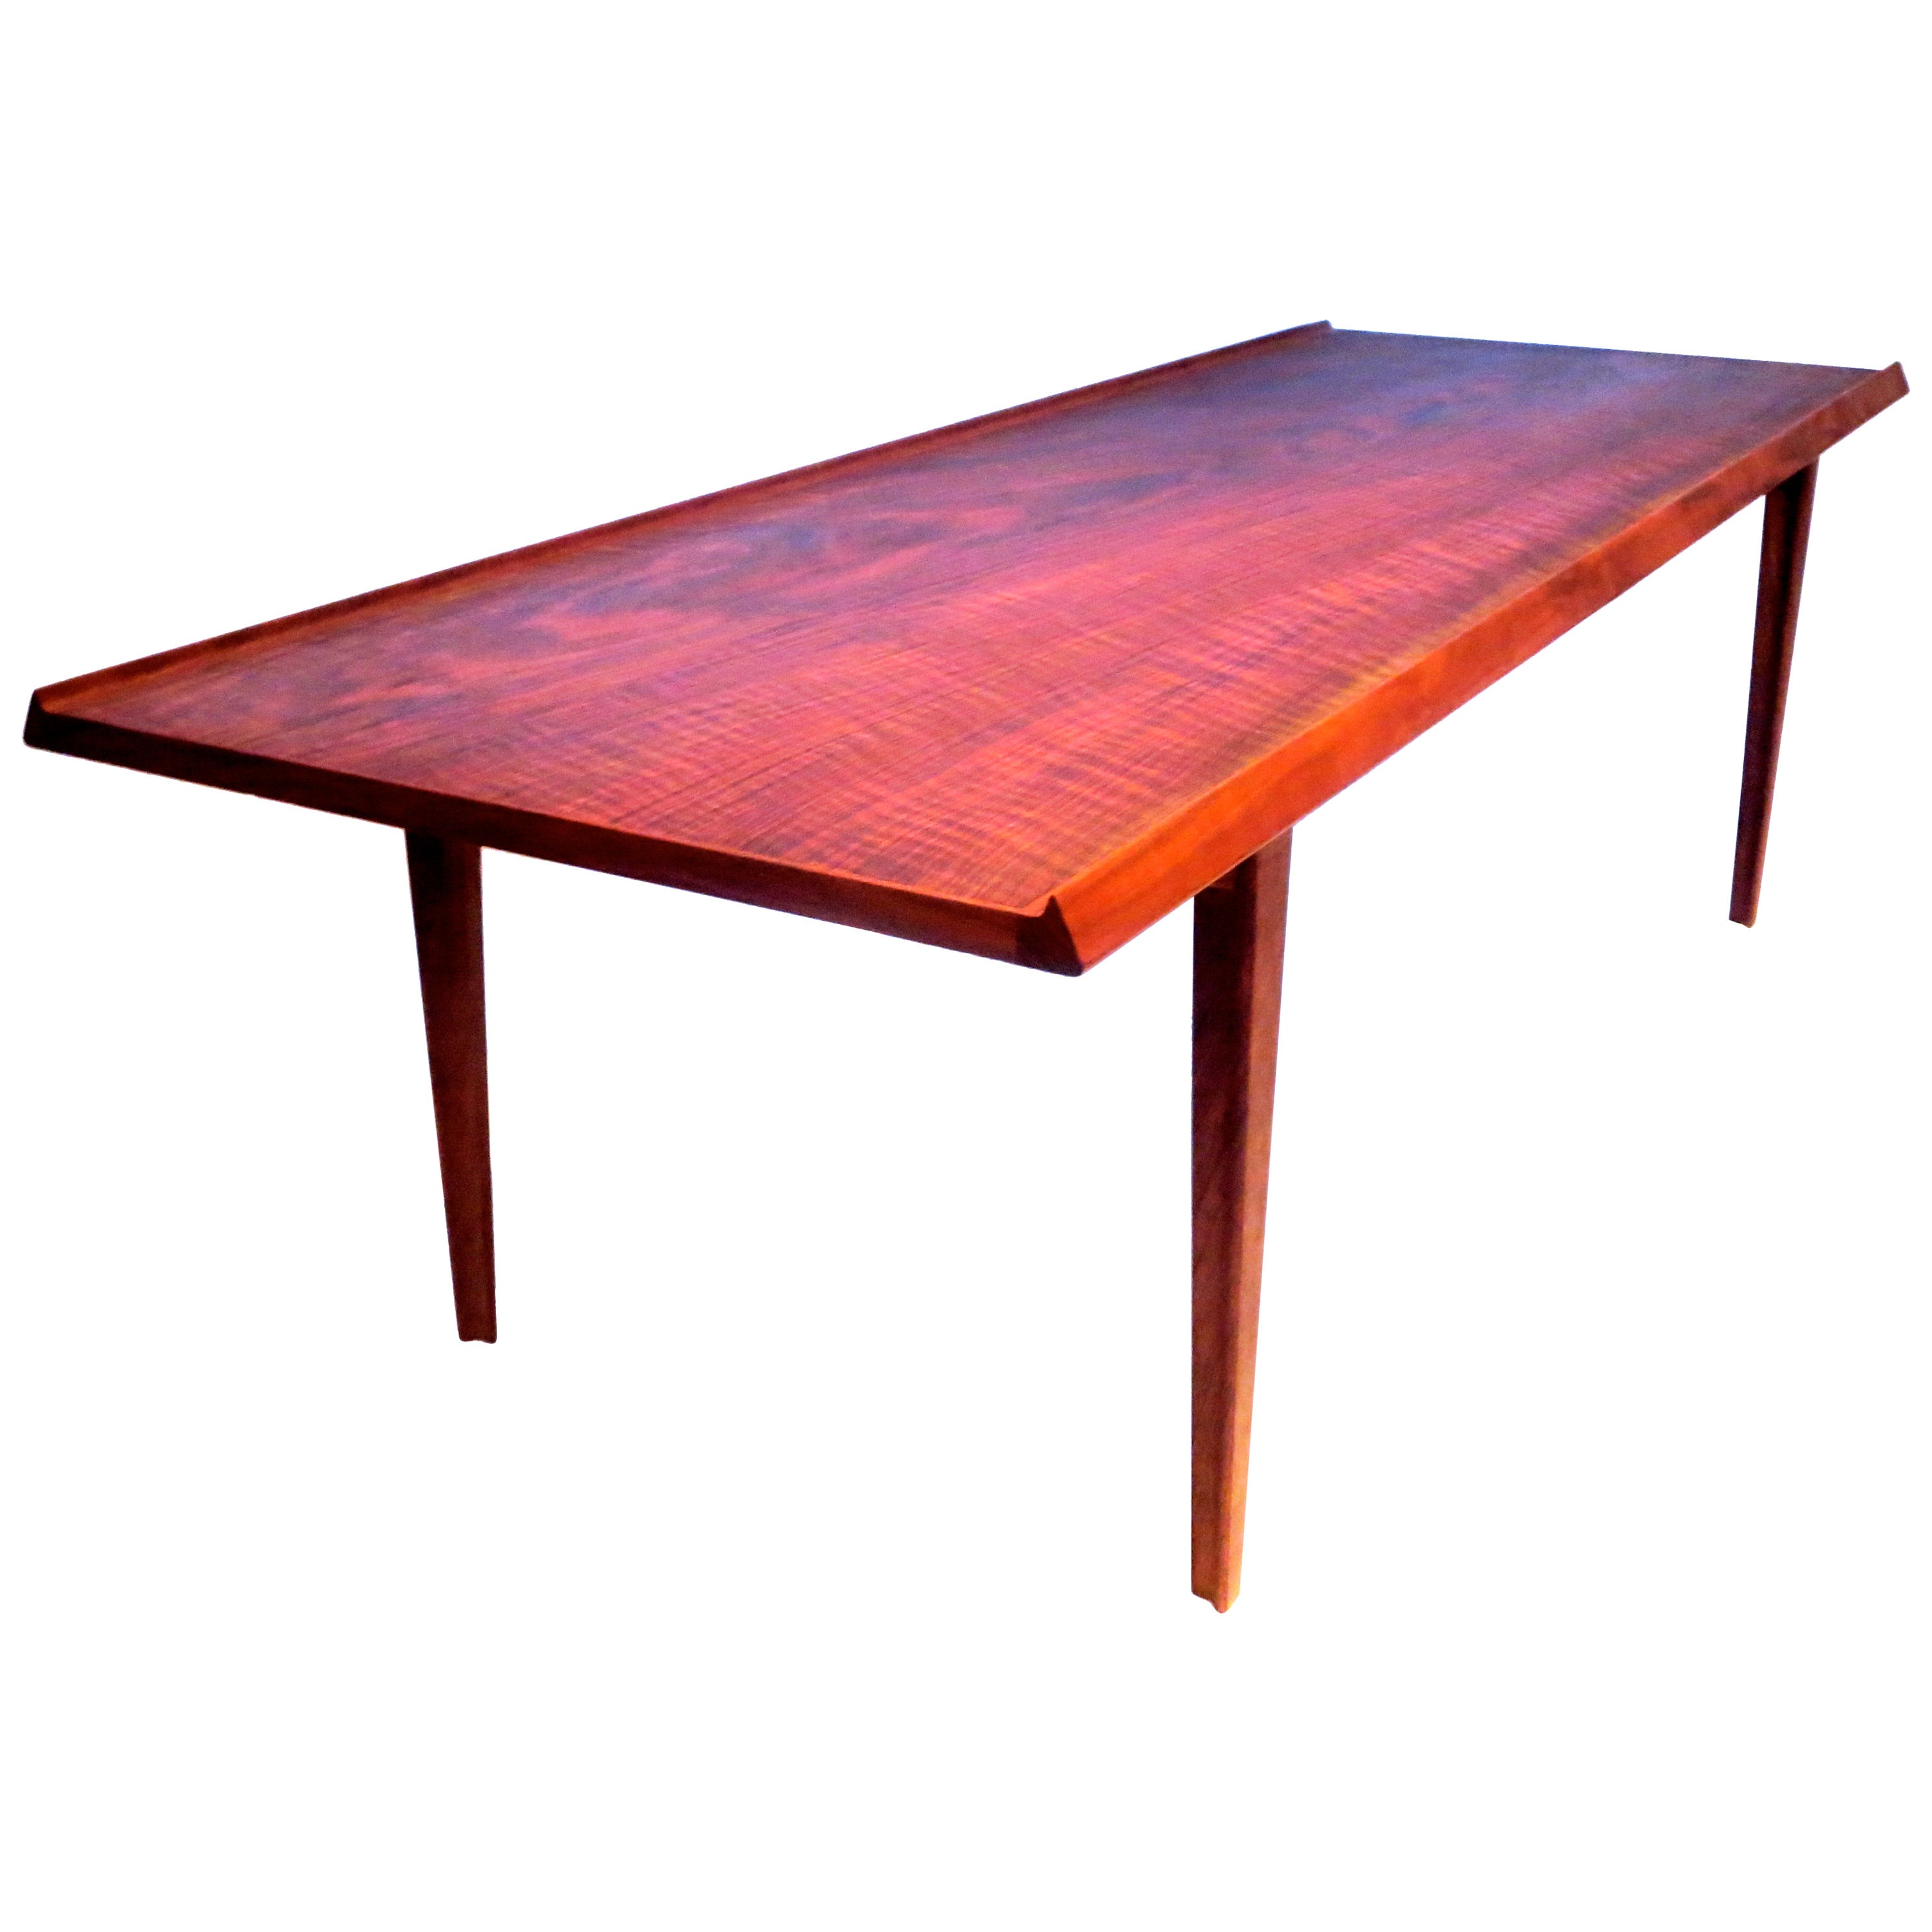 1950s Danish Modern walnut coffee table with raised edge